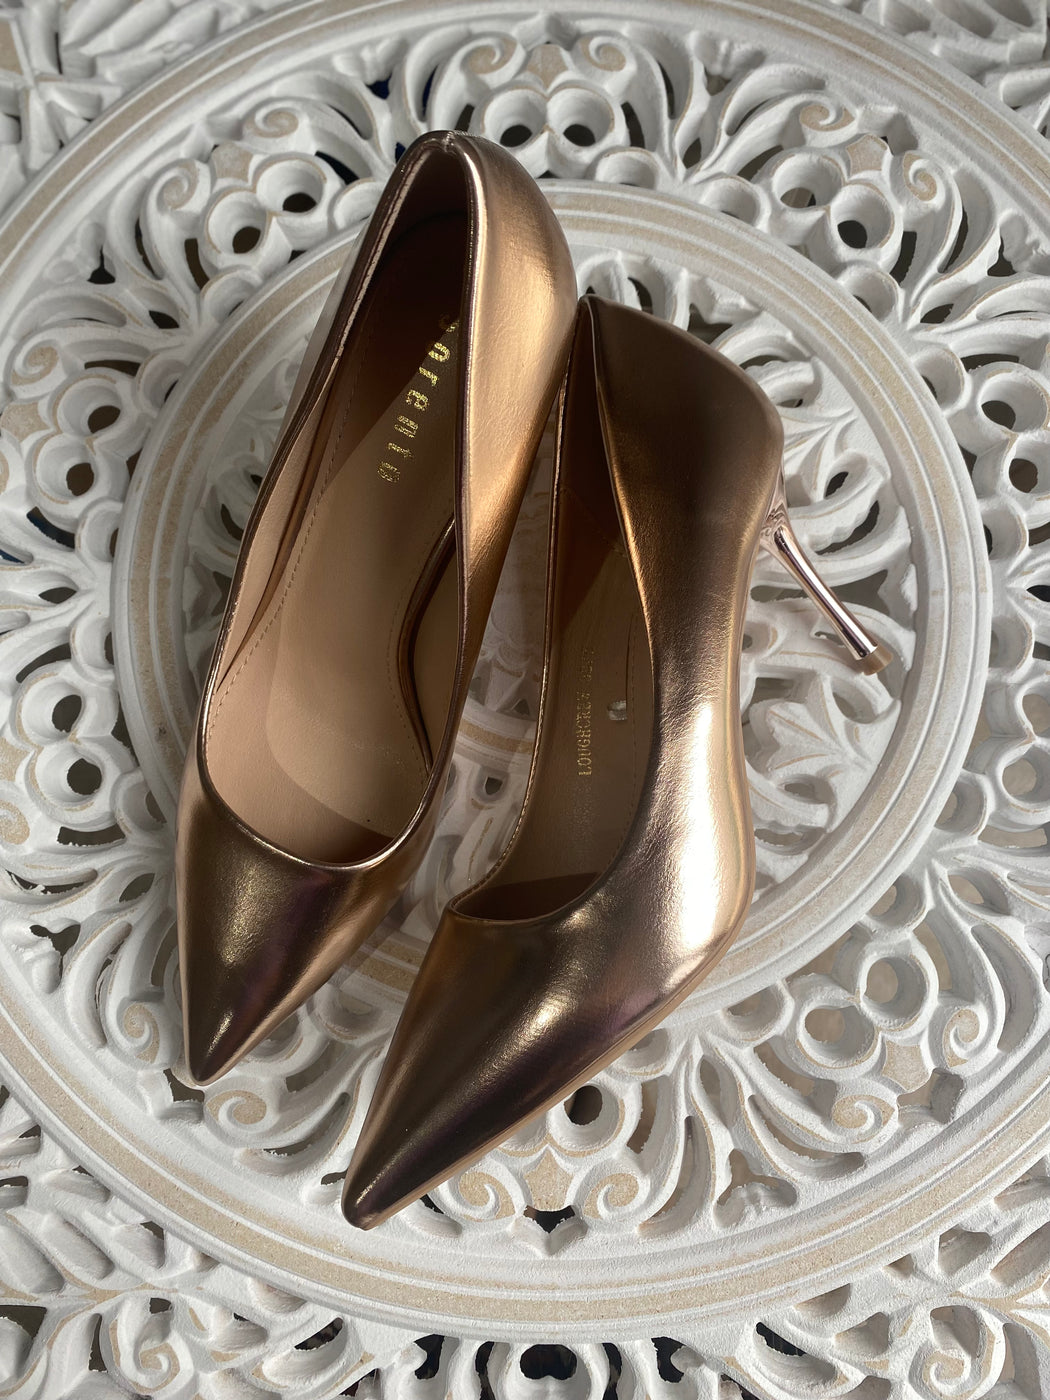 Loughcrew rose gold heels